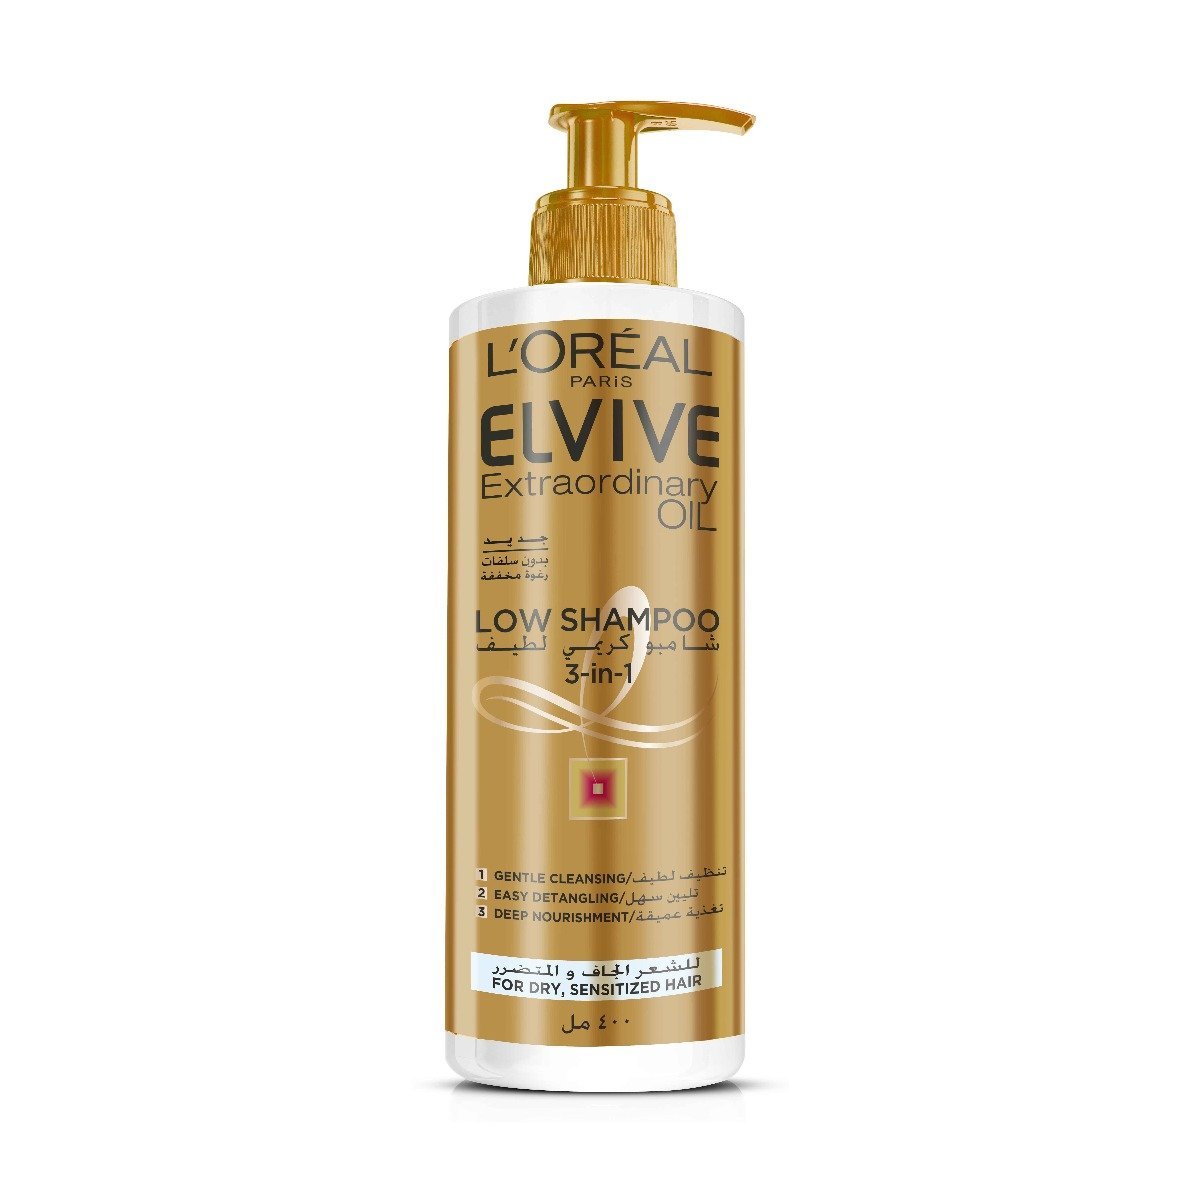 Loreal paris Elvive Extraordinary Oil Low Shampoo - 400ml - Bloom Pharmacy